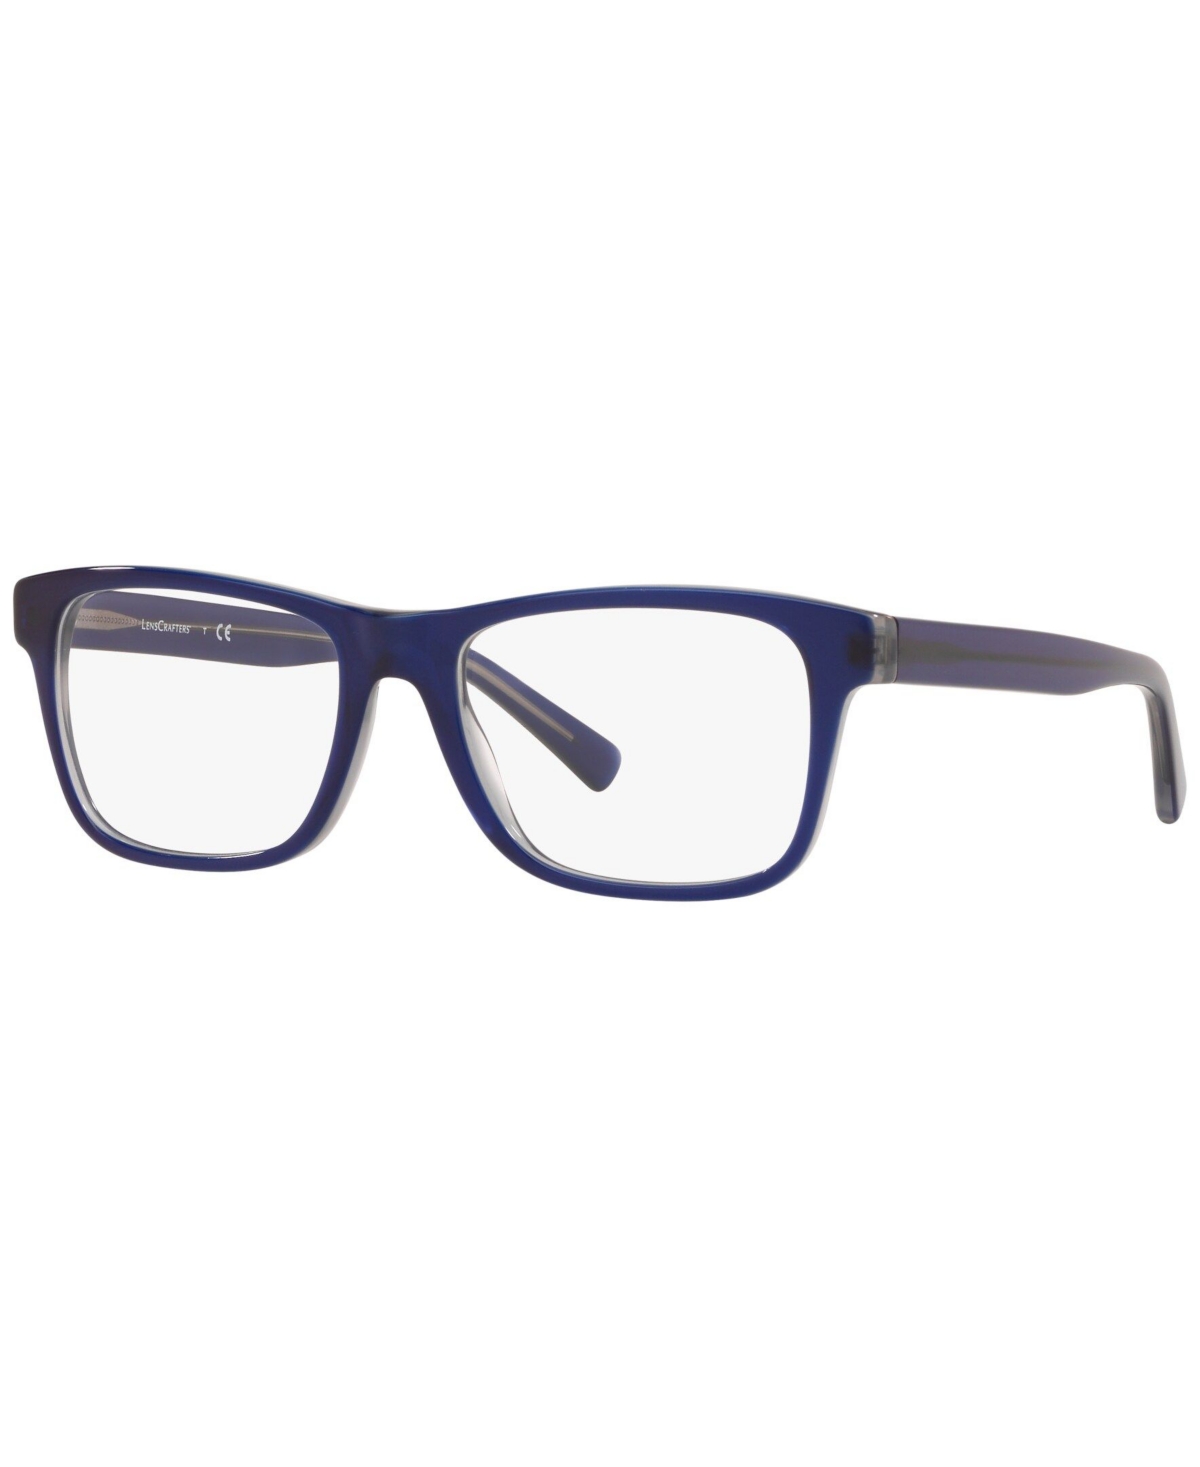 EC2002 Unisex Square Eyeglasses - Blue